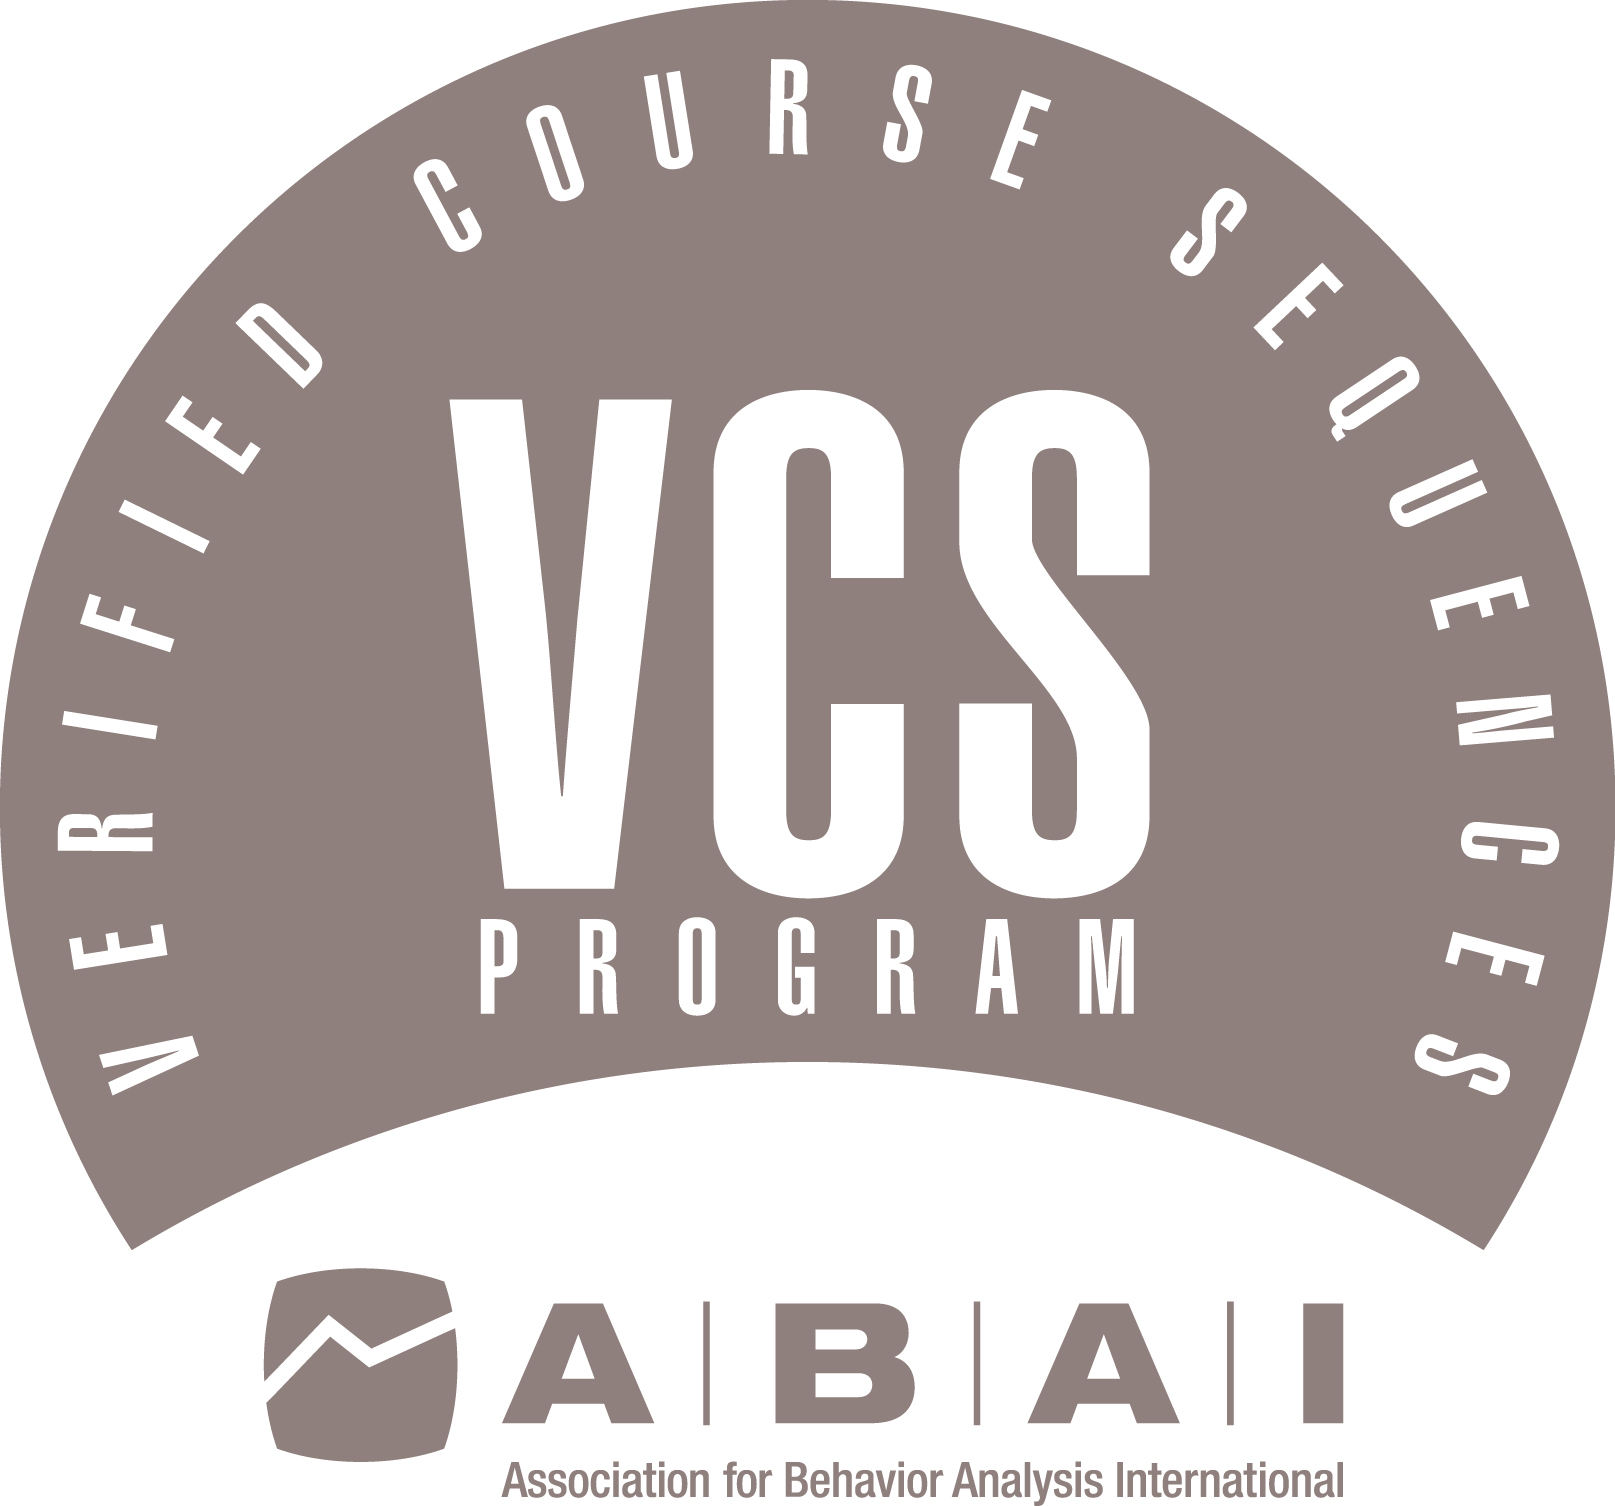 VCS Logo